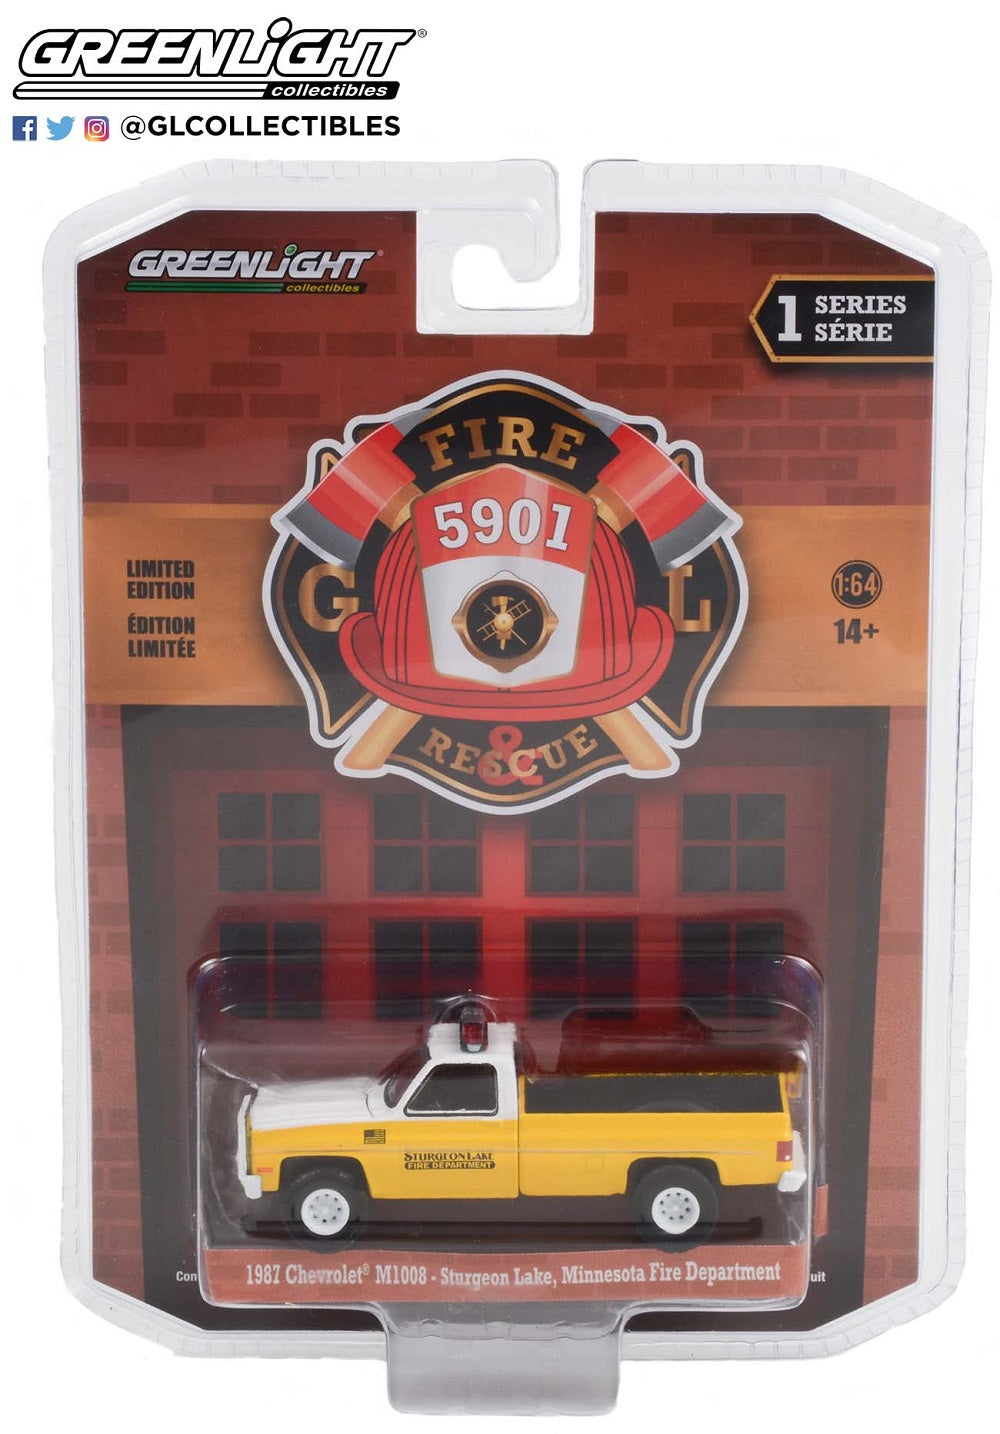 Greenlight Fire & Rescue Series 1